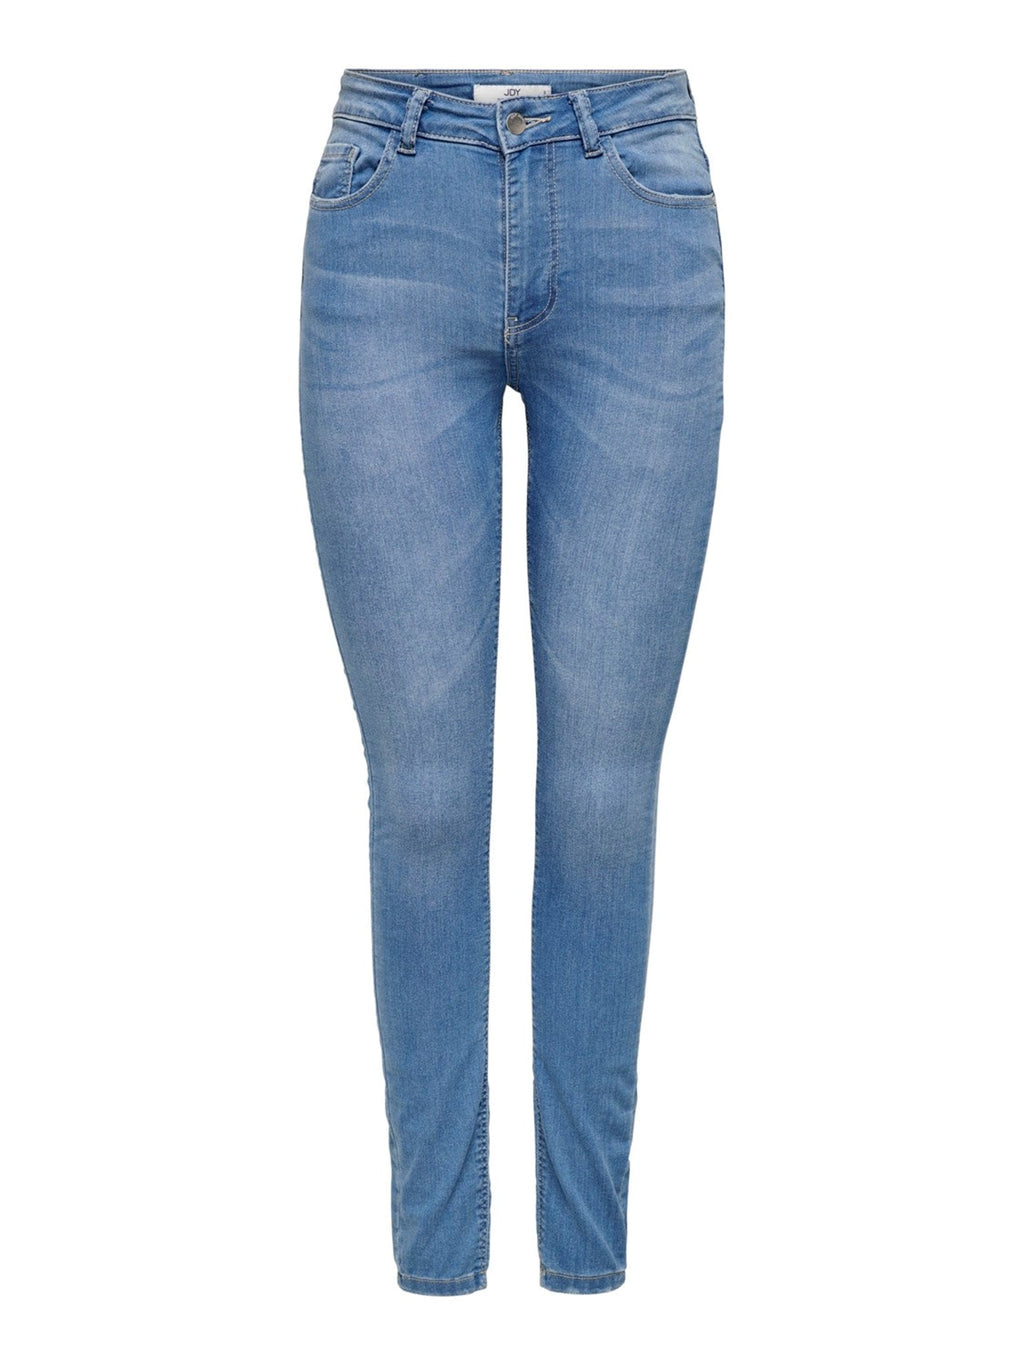 Performance Jeans - Light Blue (Mid-waist)